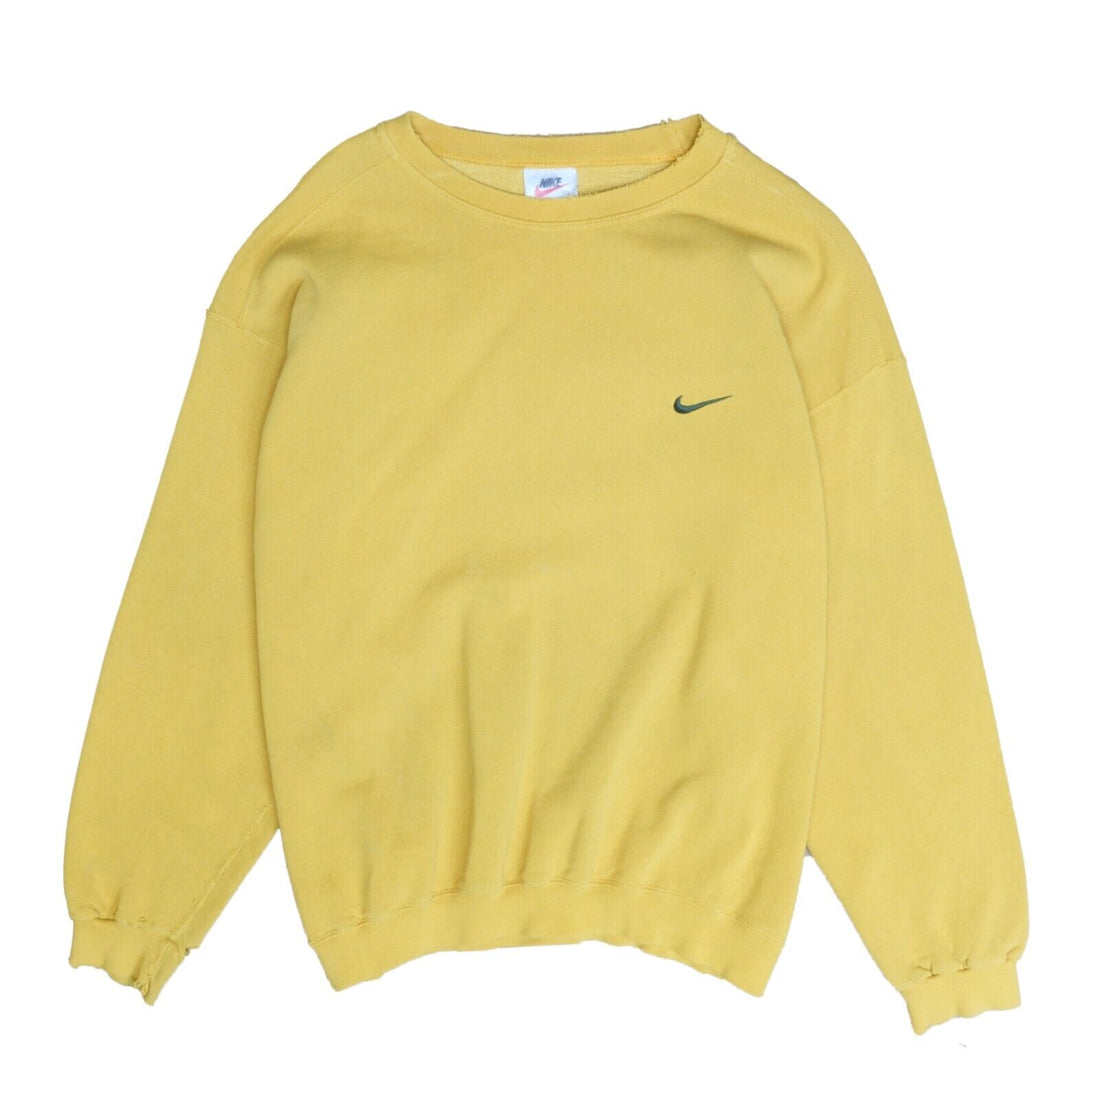 Vintage Nike Sweatshirt Crewneck Size XL Yellow Green Embroidered Swoosh 90s